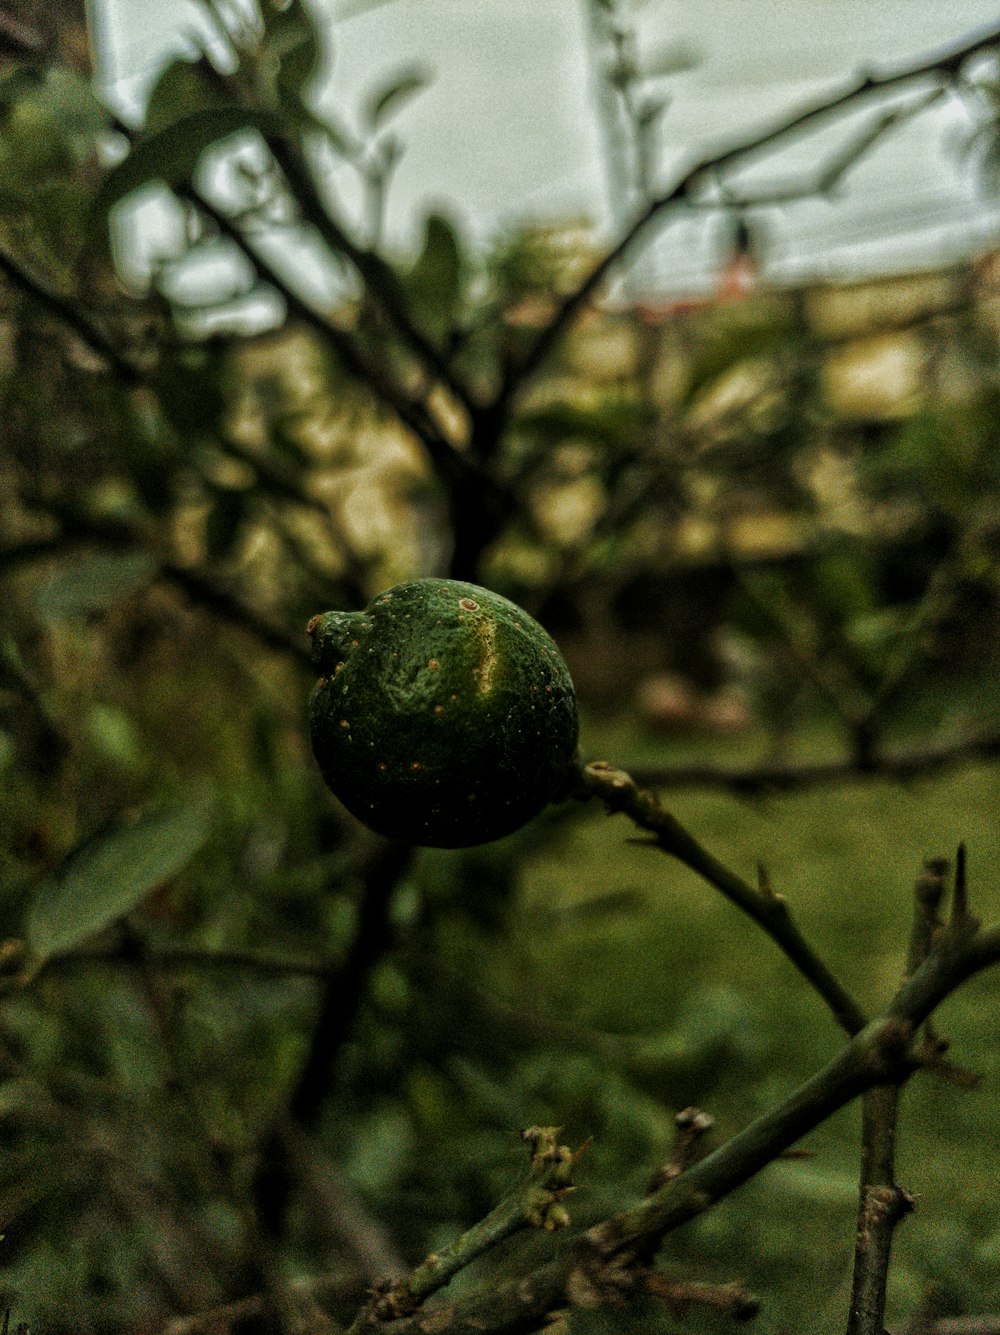 green fruit on brown tree branch during daytime